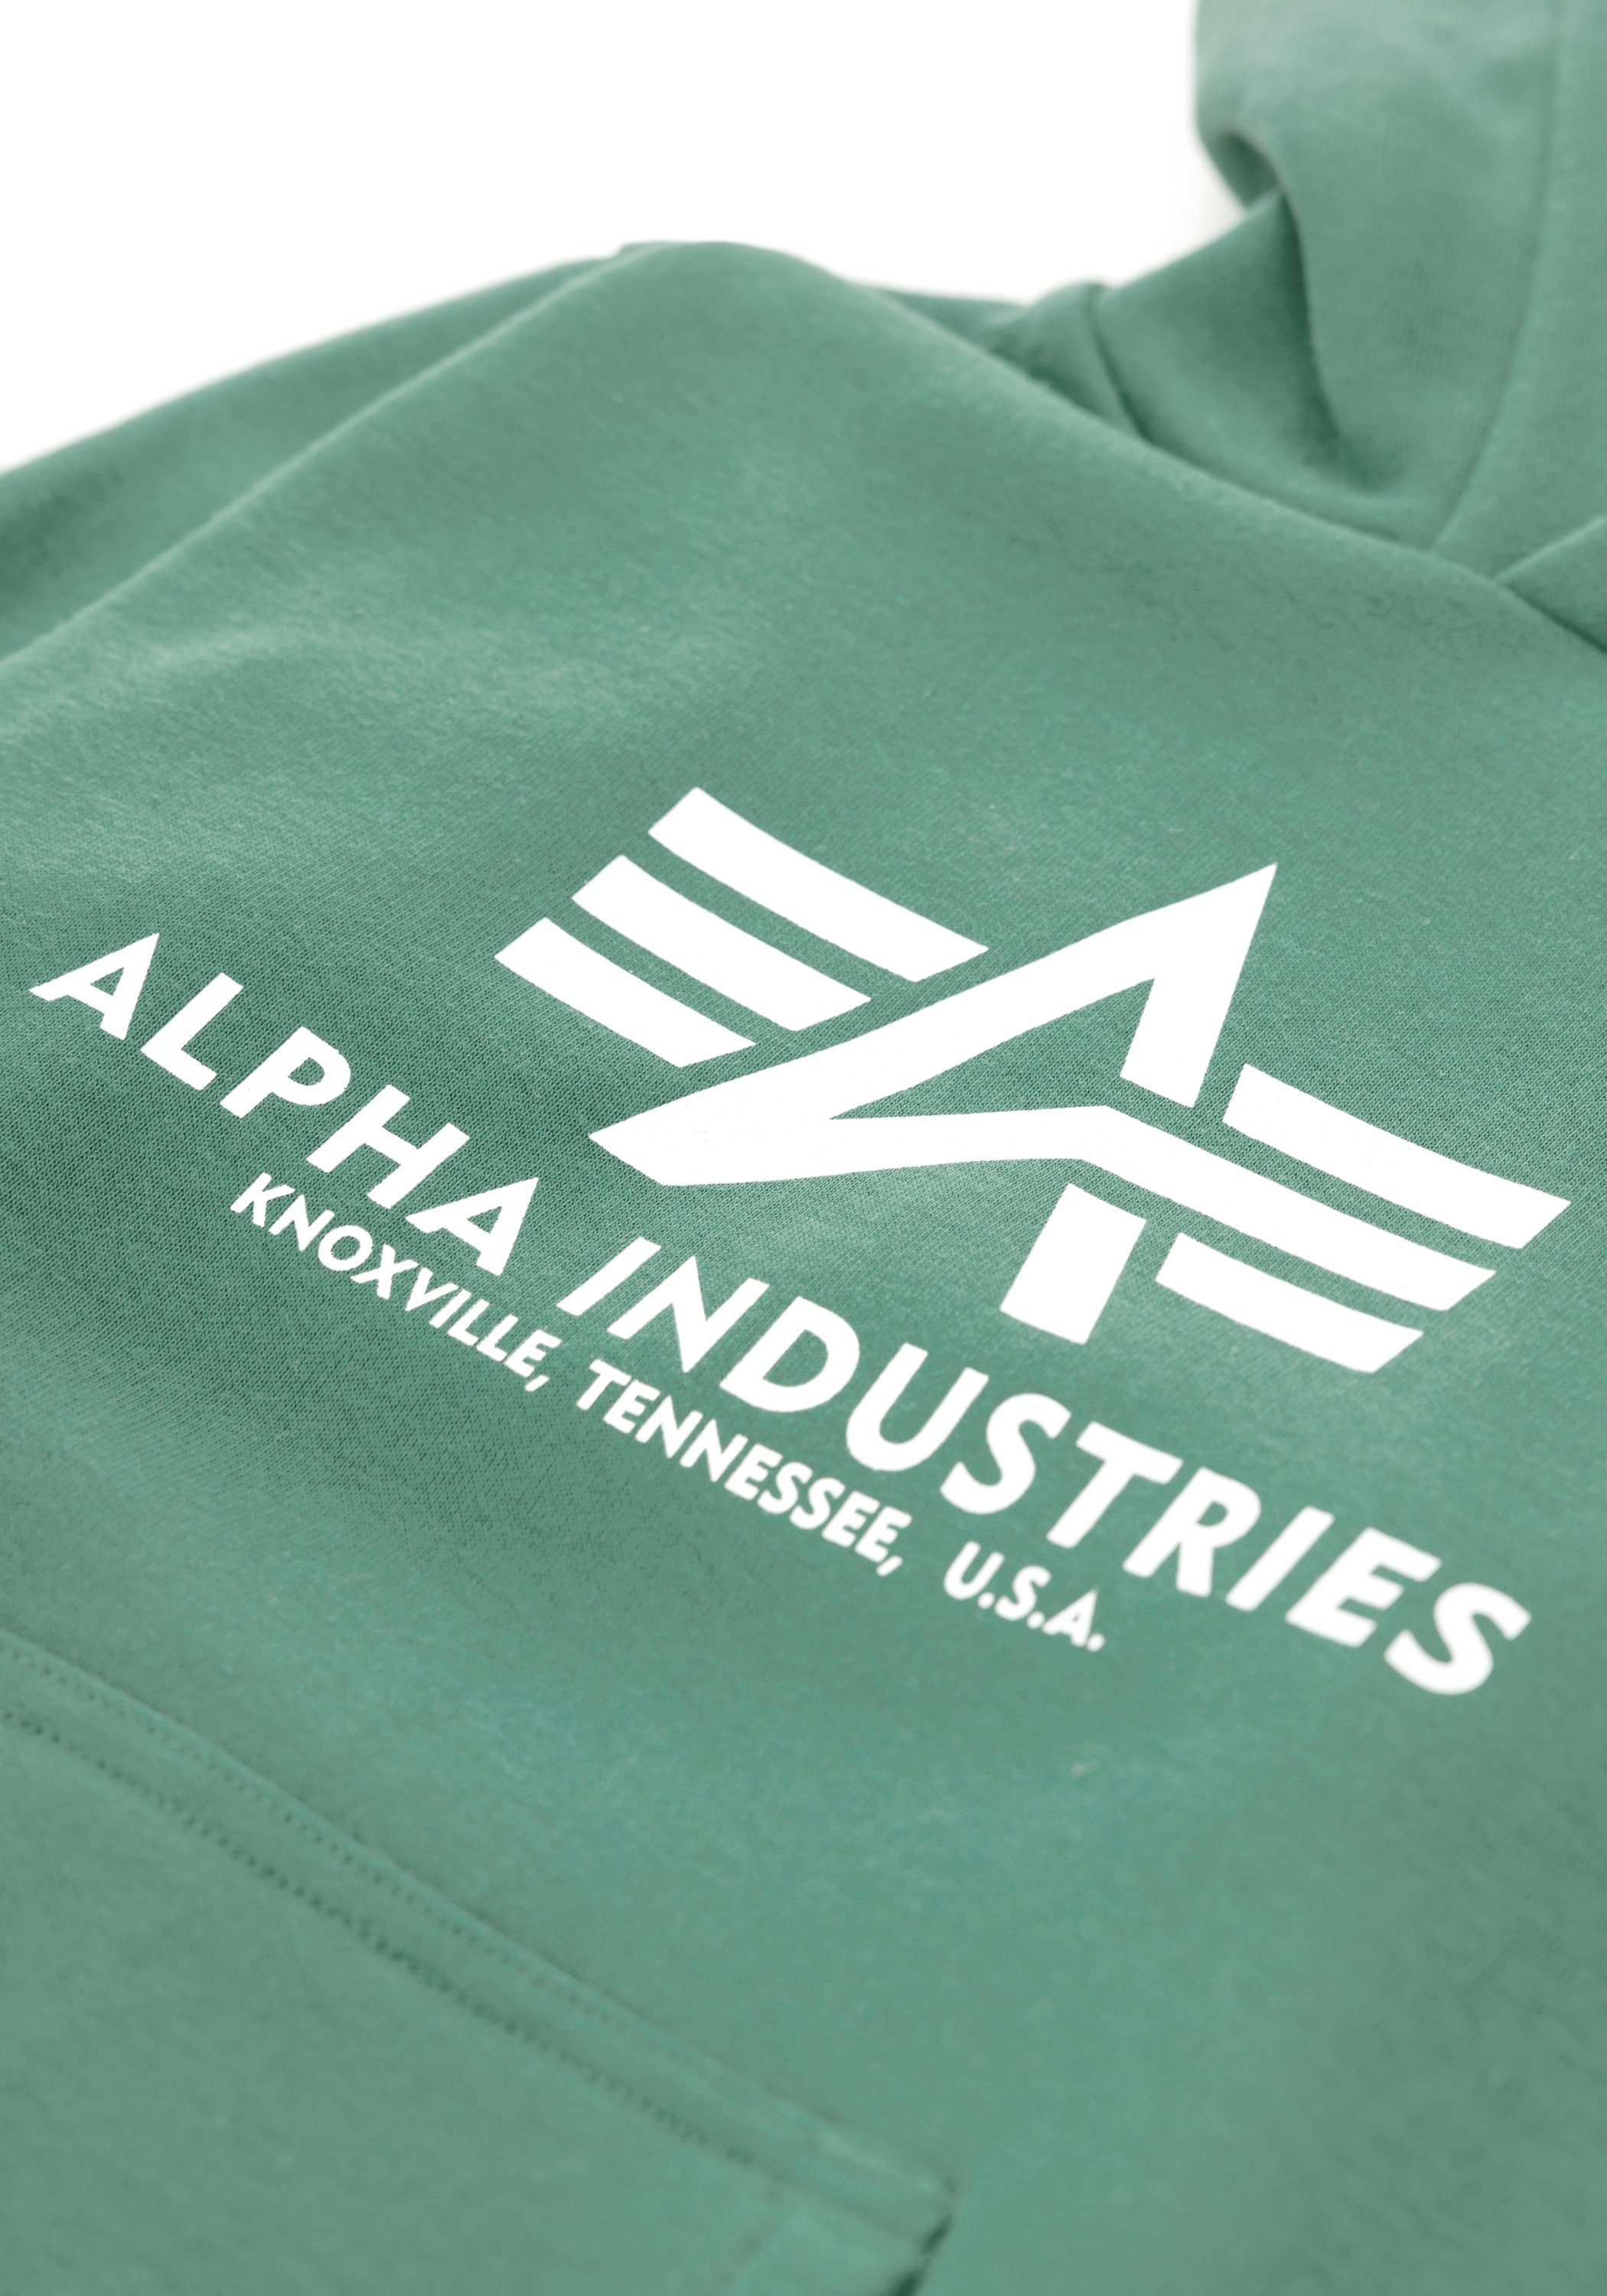 Alpha Industries Kapuzenshirt Hoody Basic Kids/Teens - green Alpha Hoodies ivy Industries Kids